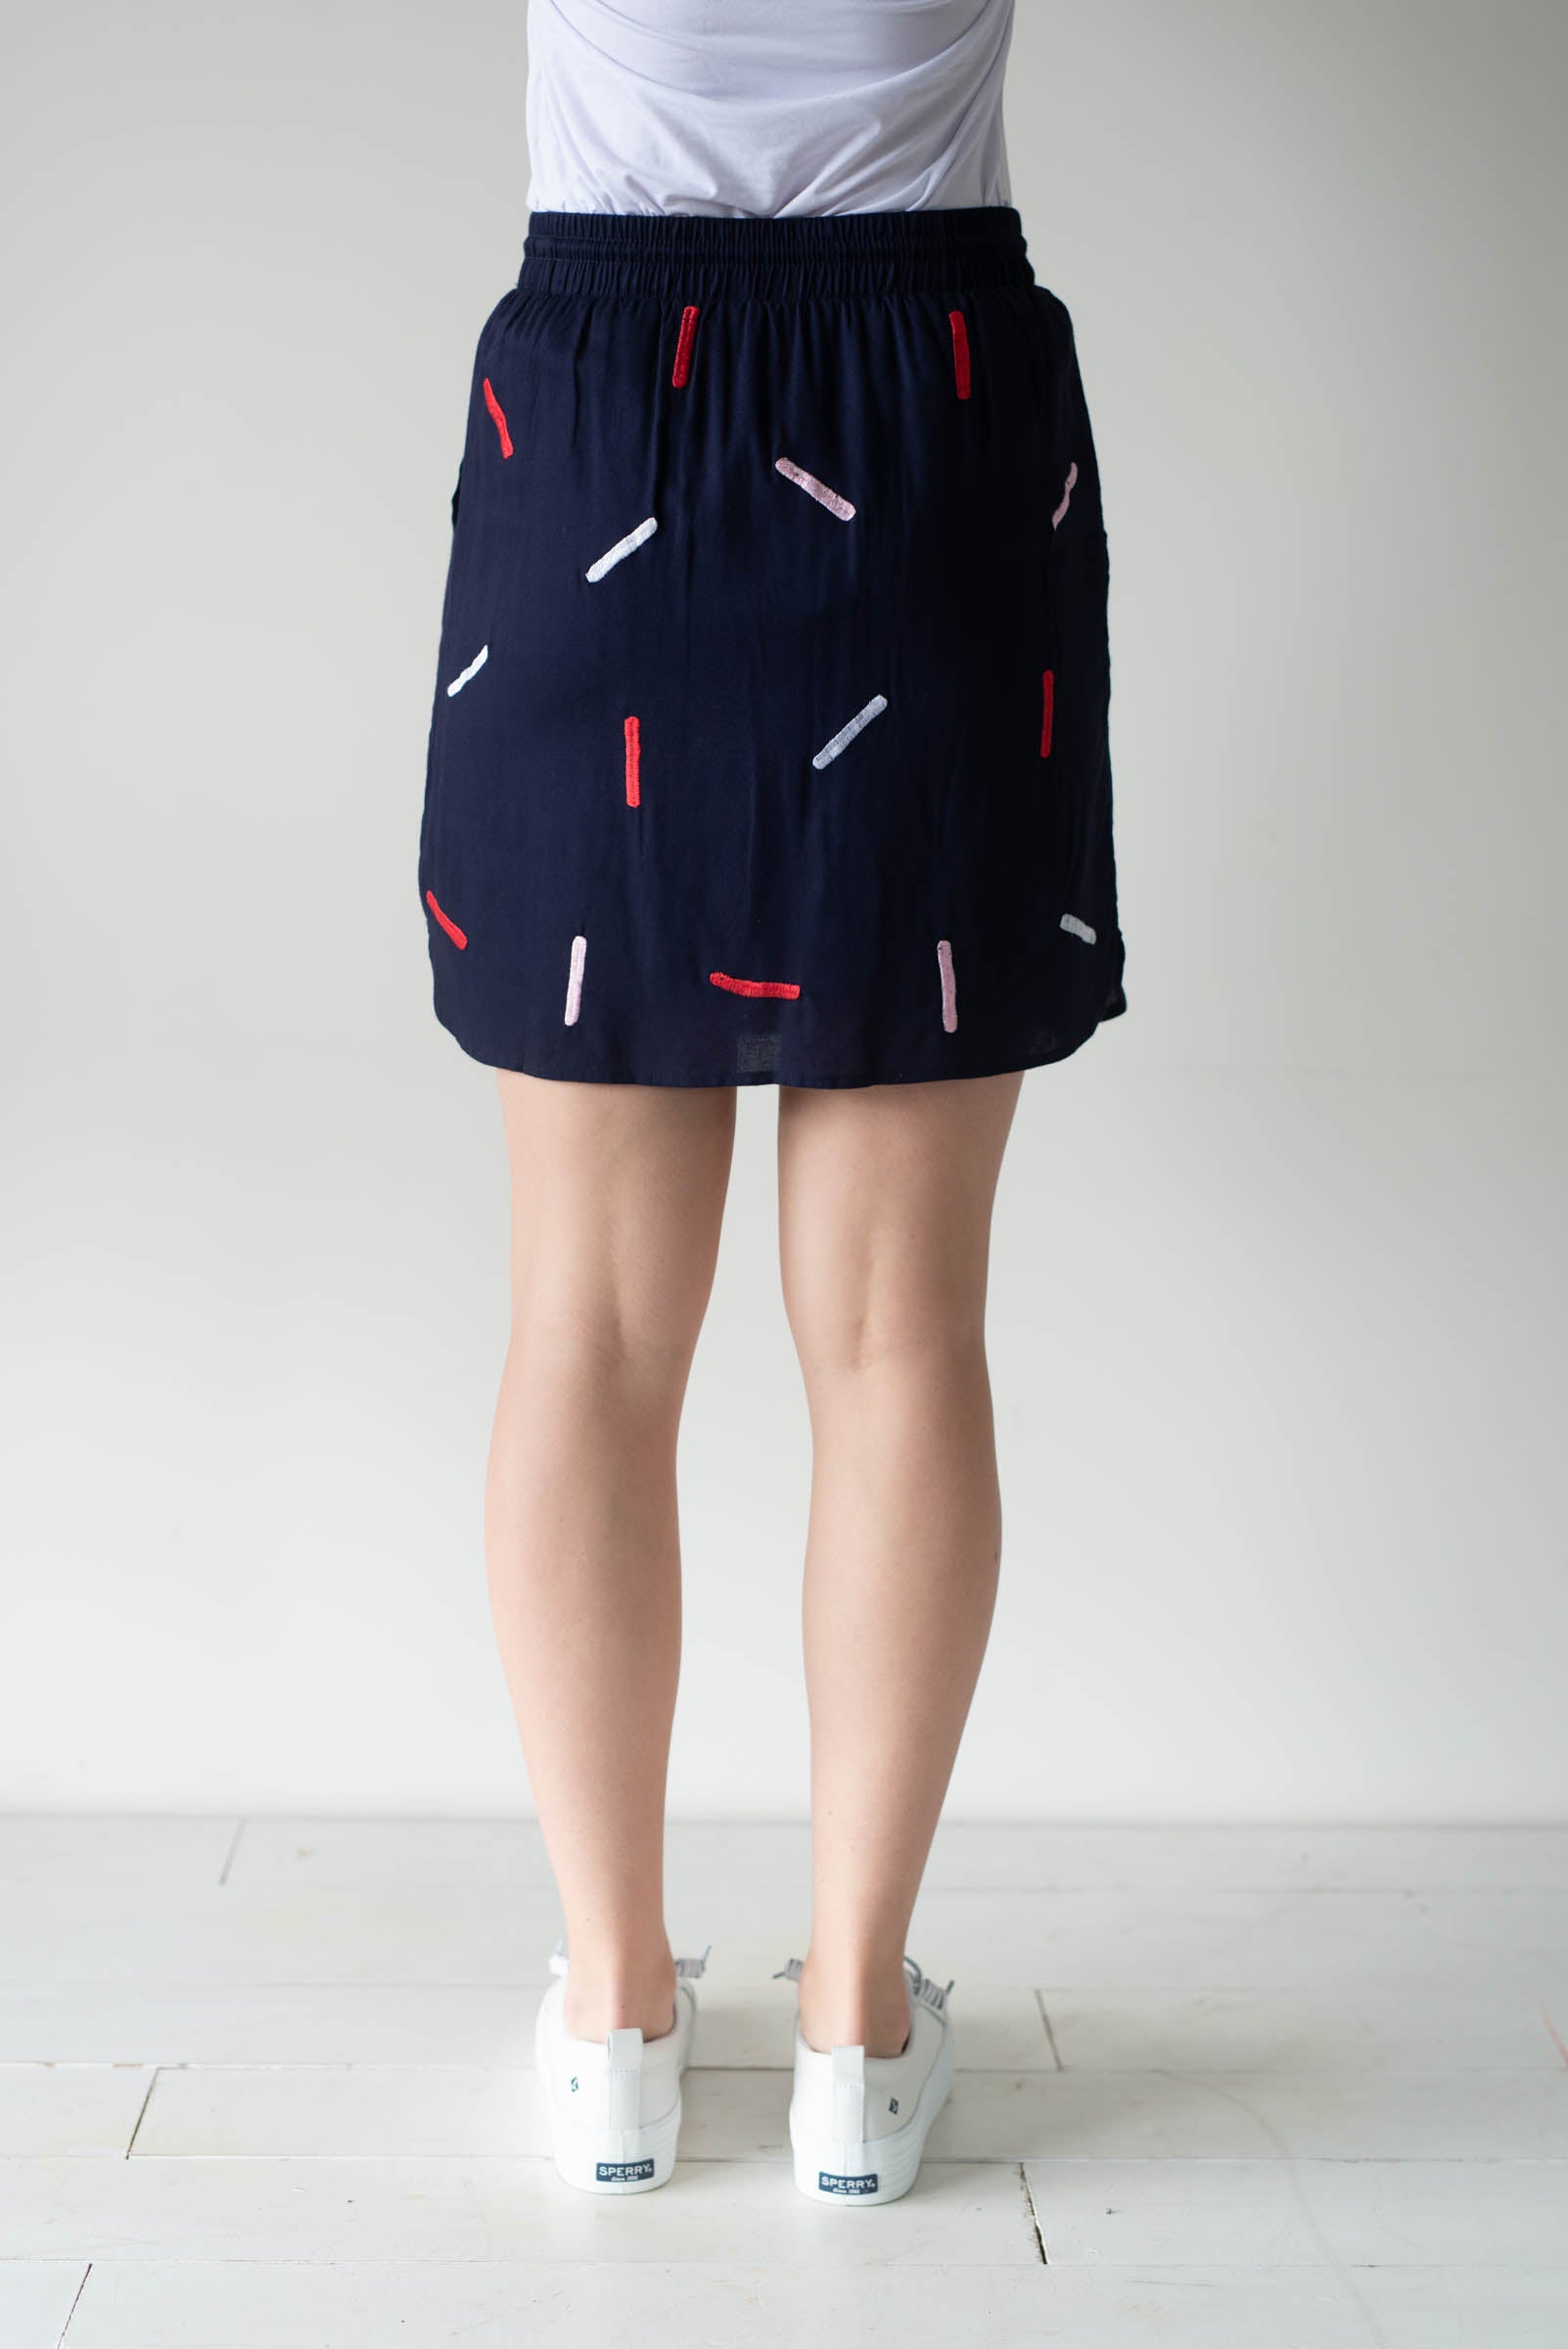 Confetti Women Skirt | Lyn Rose Boutique